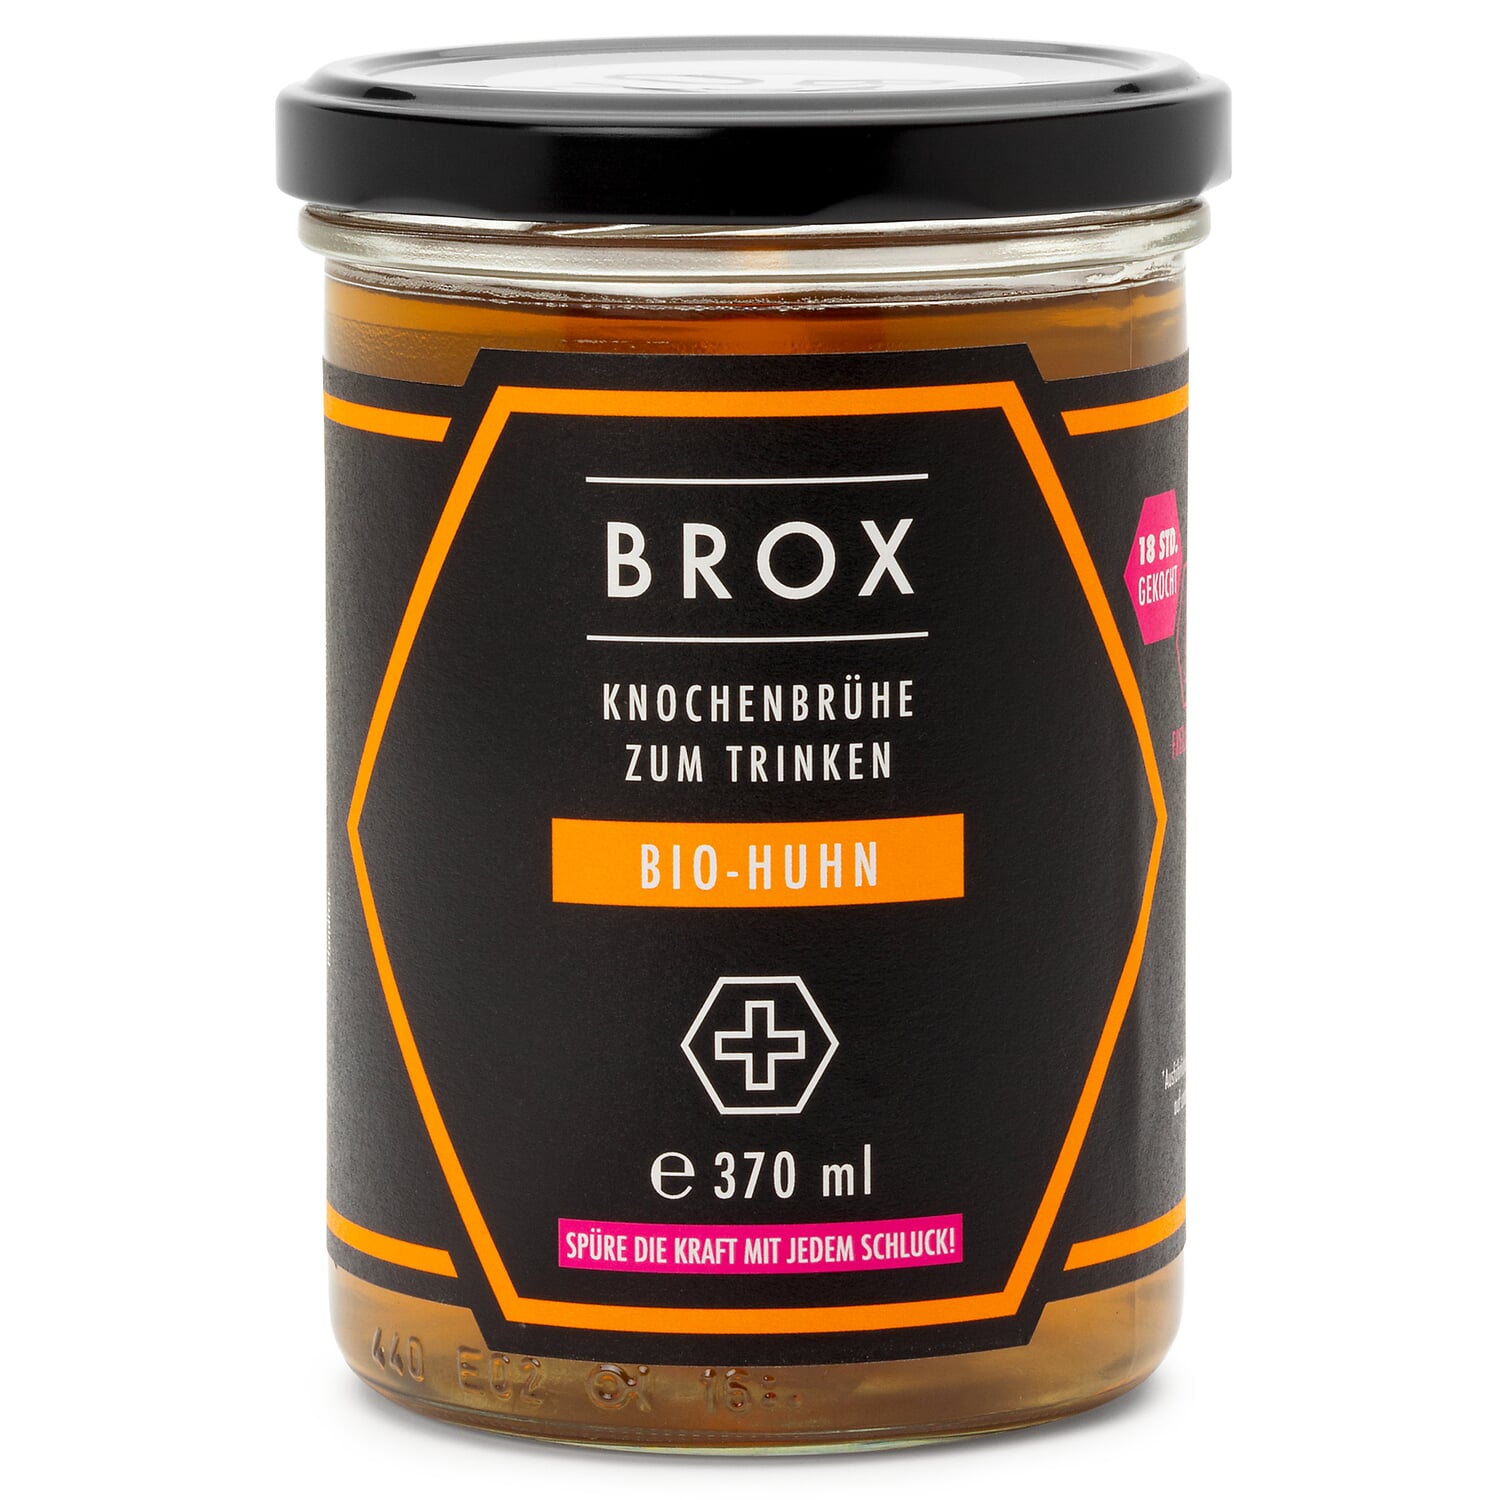 Brox Knochenbrühe Bio-Huhn | Manufactum